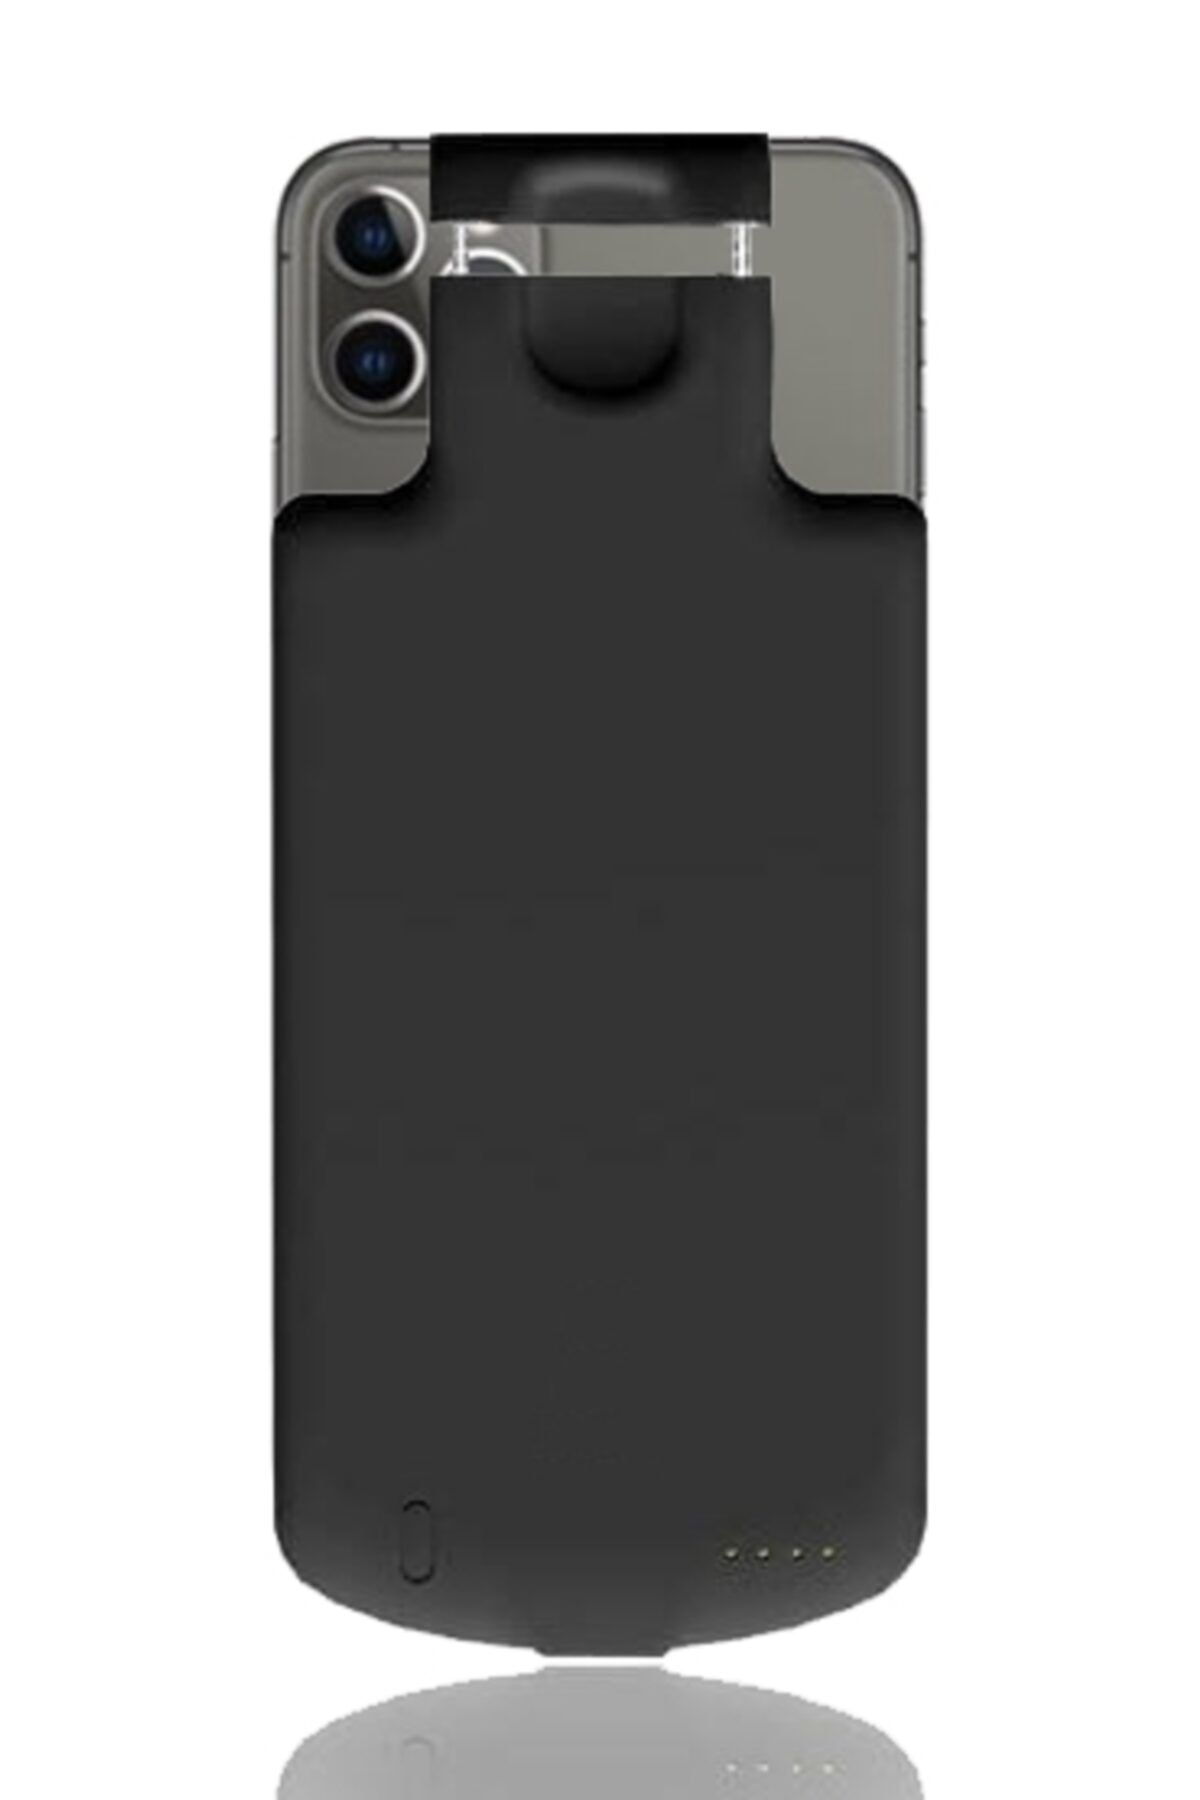 Mobilcadde Iphone 11 Pro Max Lightning Girişli 5000 Mah Bataryalı Kılıf